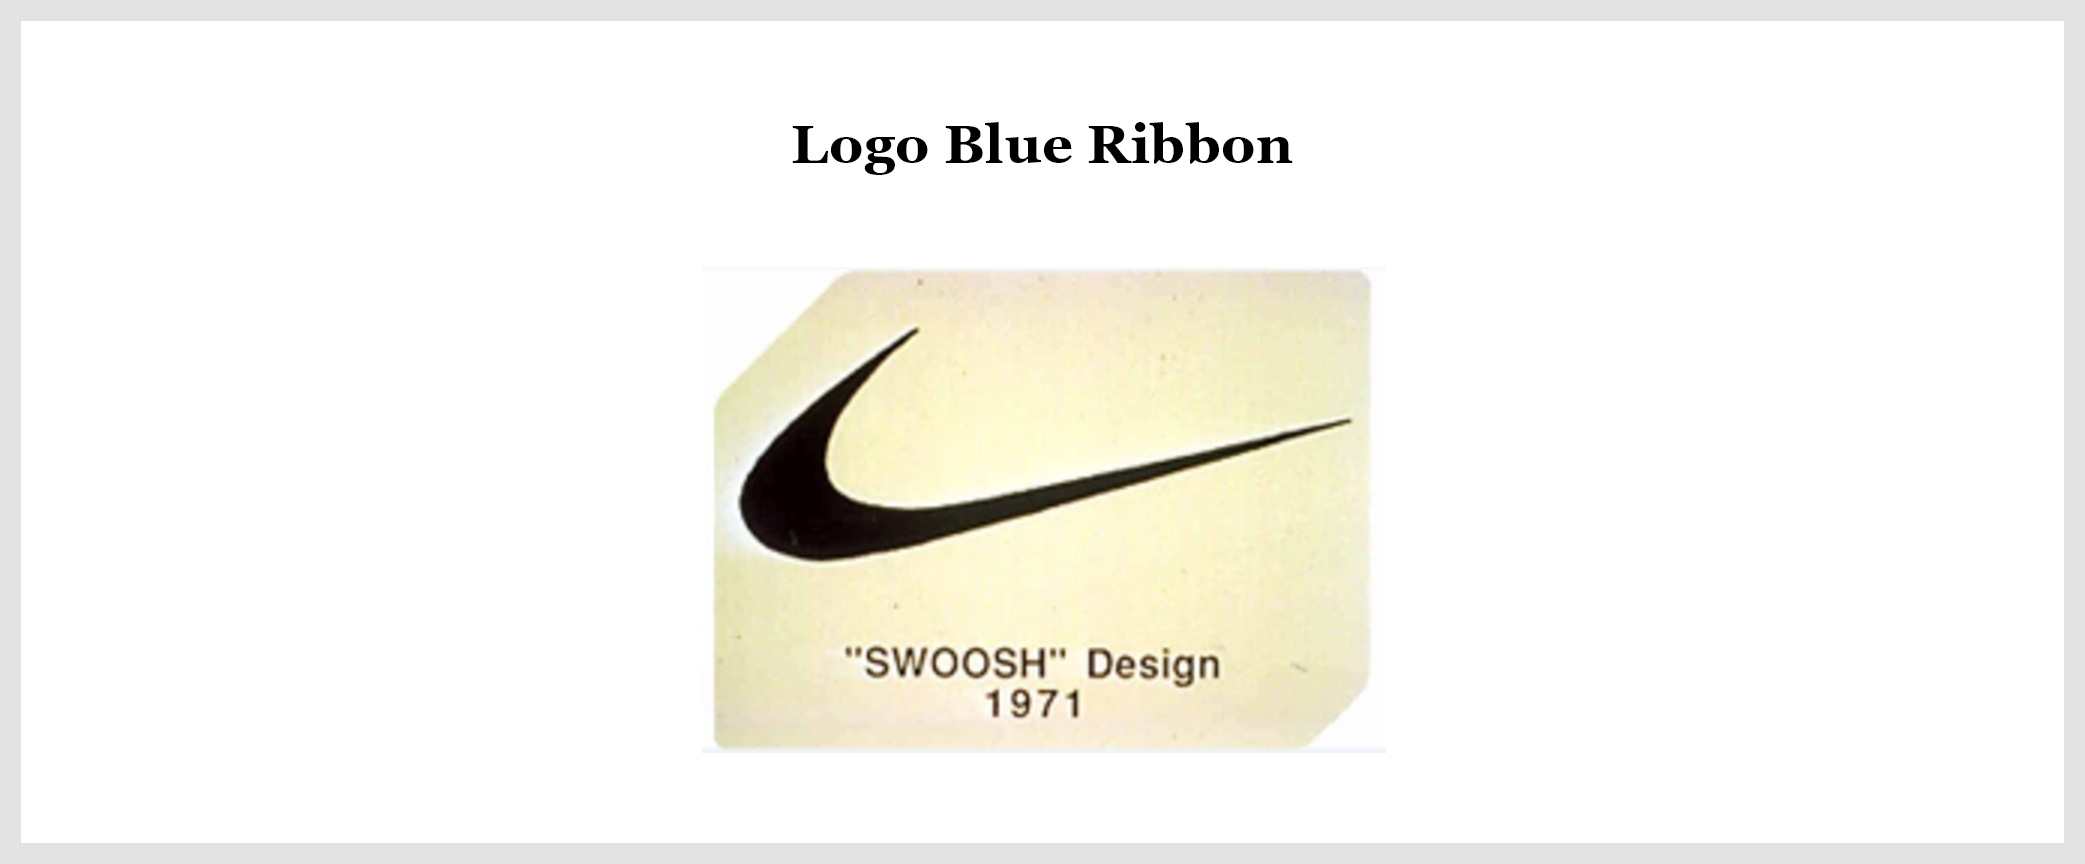 Lo Blue Ribbon 'SWOOSH' Design 1971